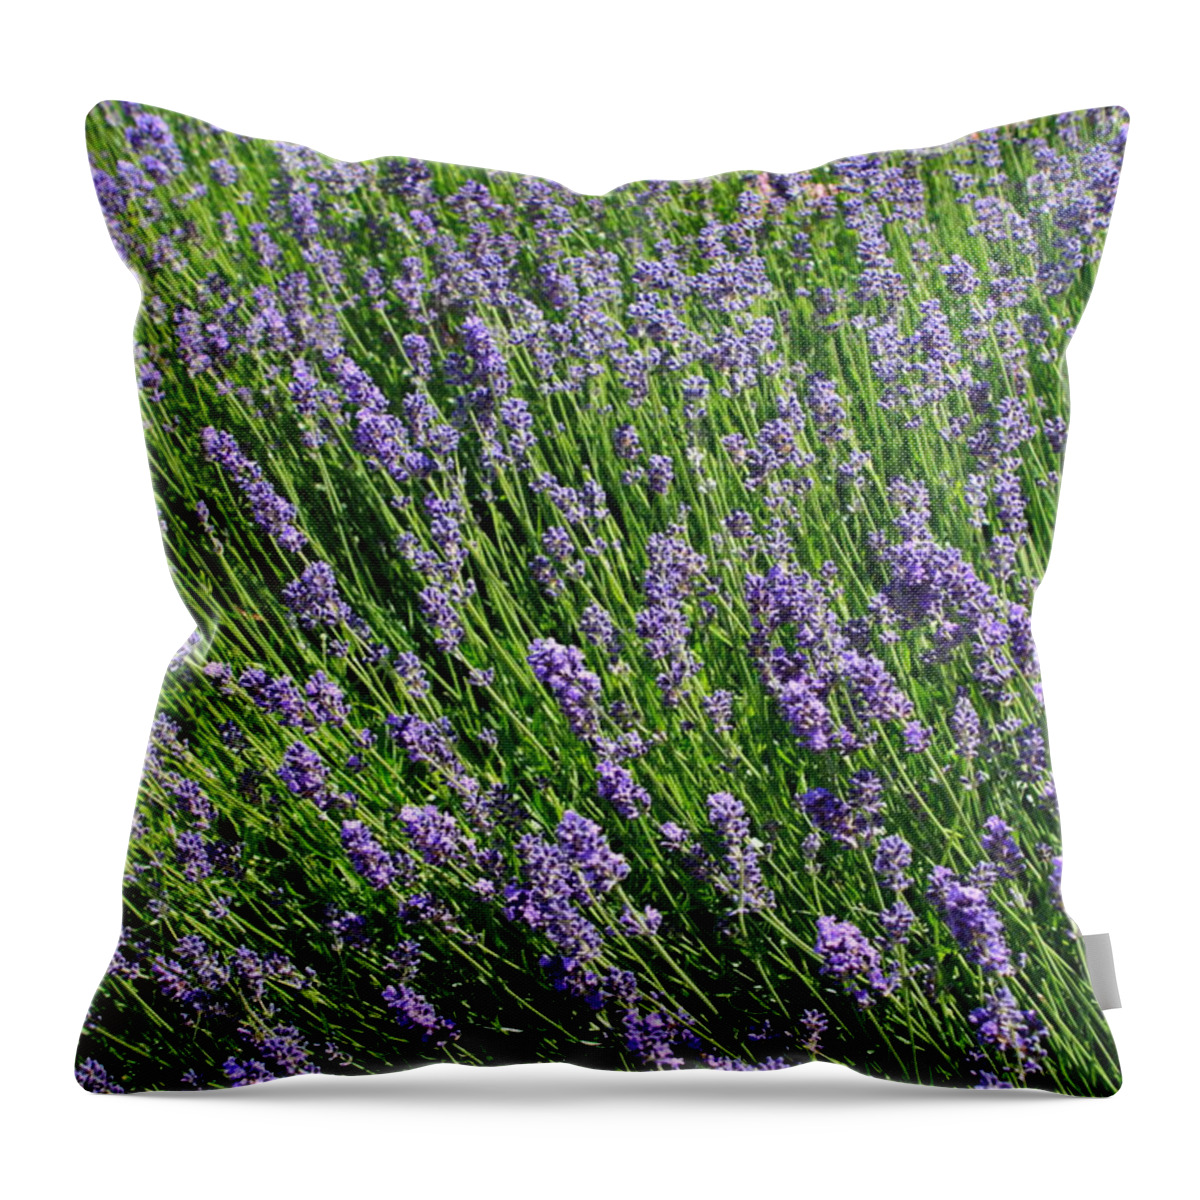 Abundance Throw Pillow featuring the photograph Flowering lavender by Ulrich Kunst And Bettina Scheidulin